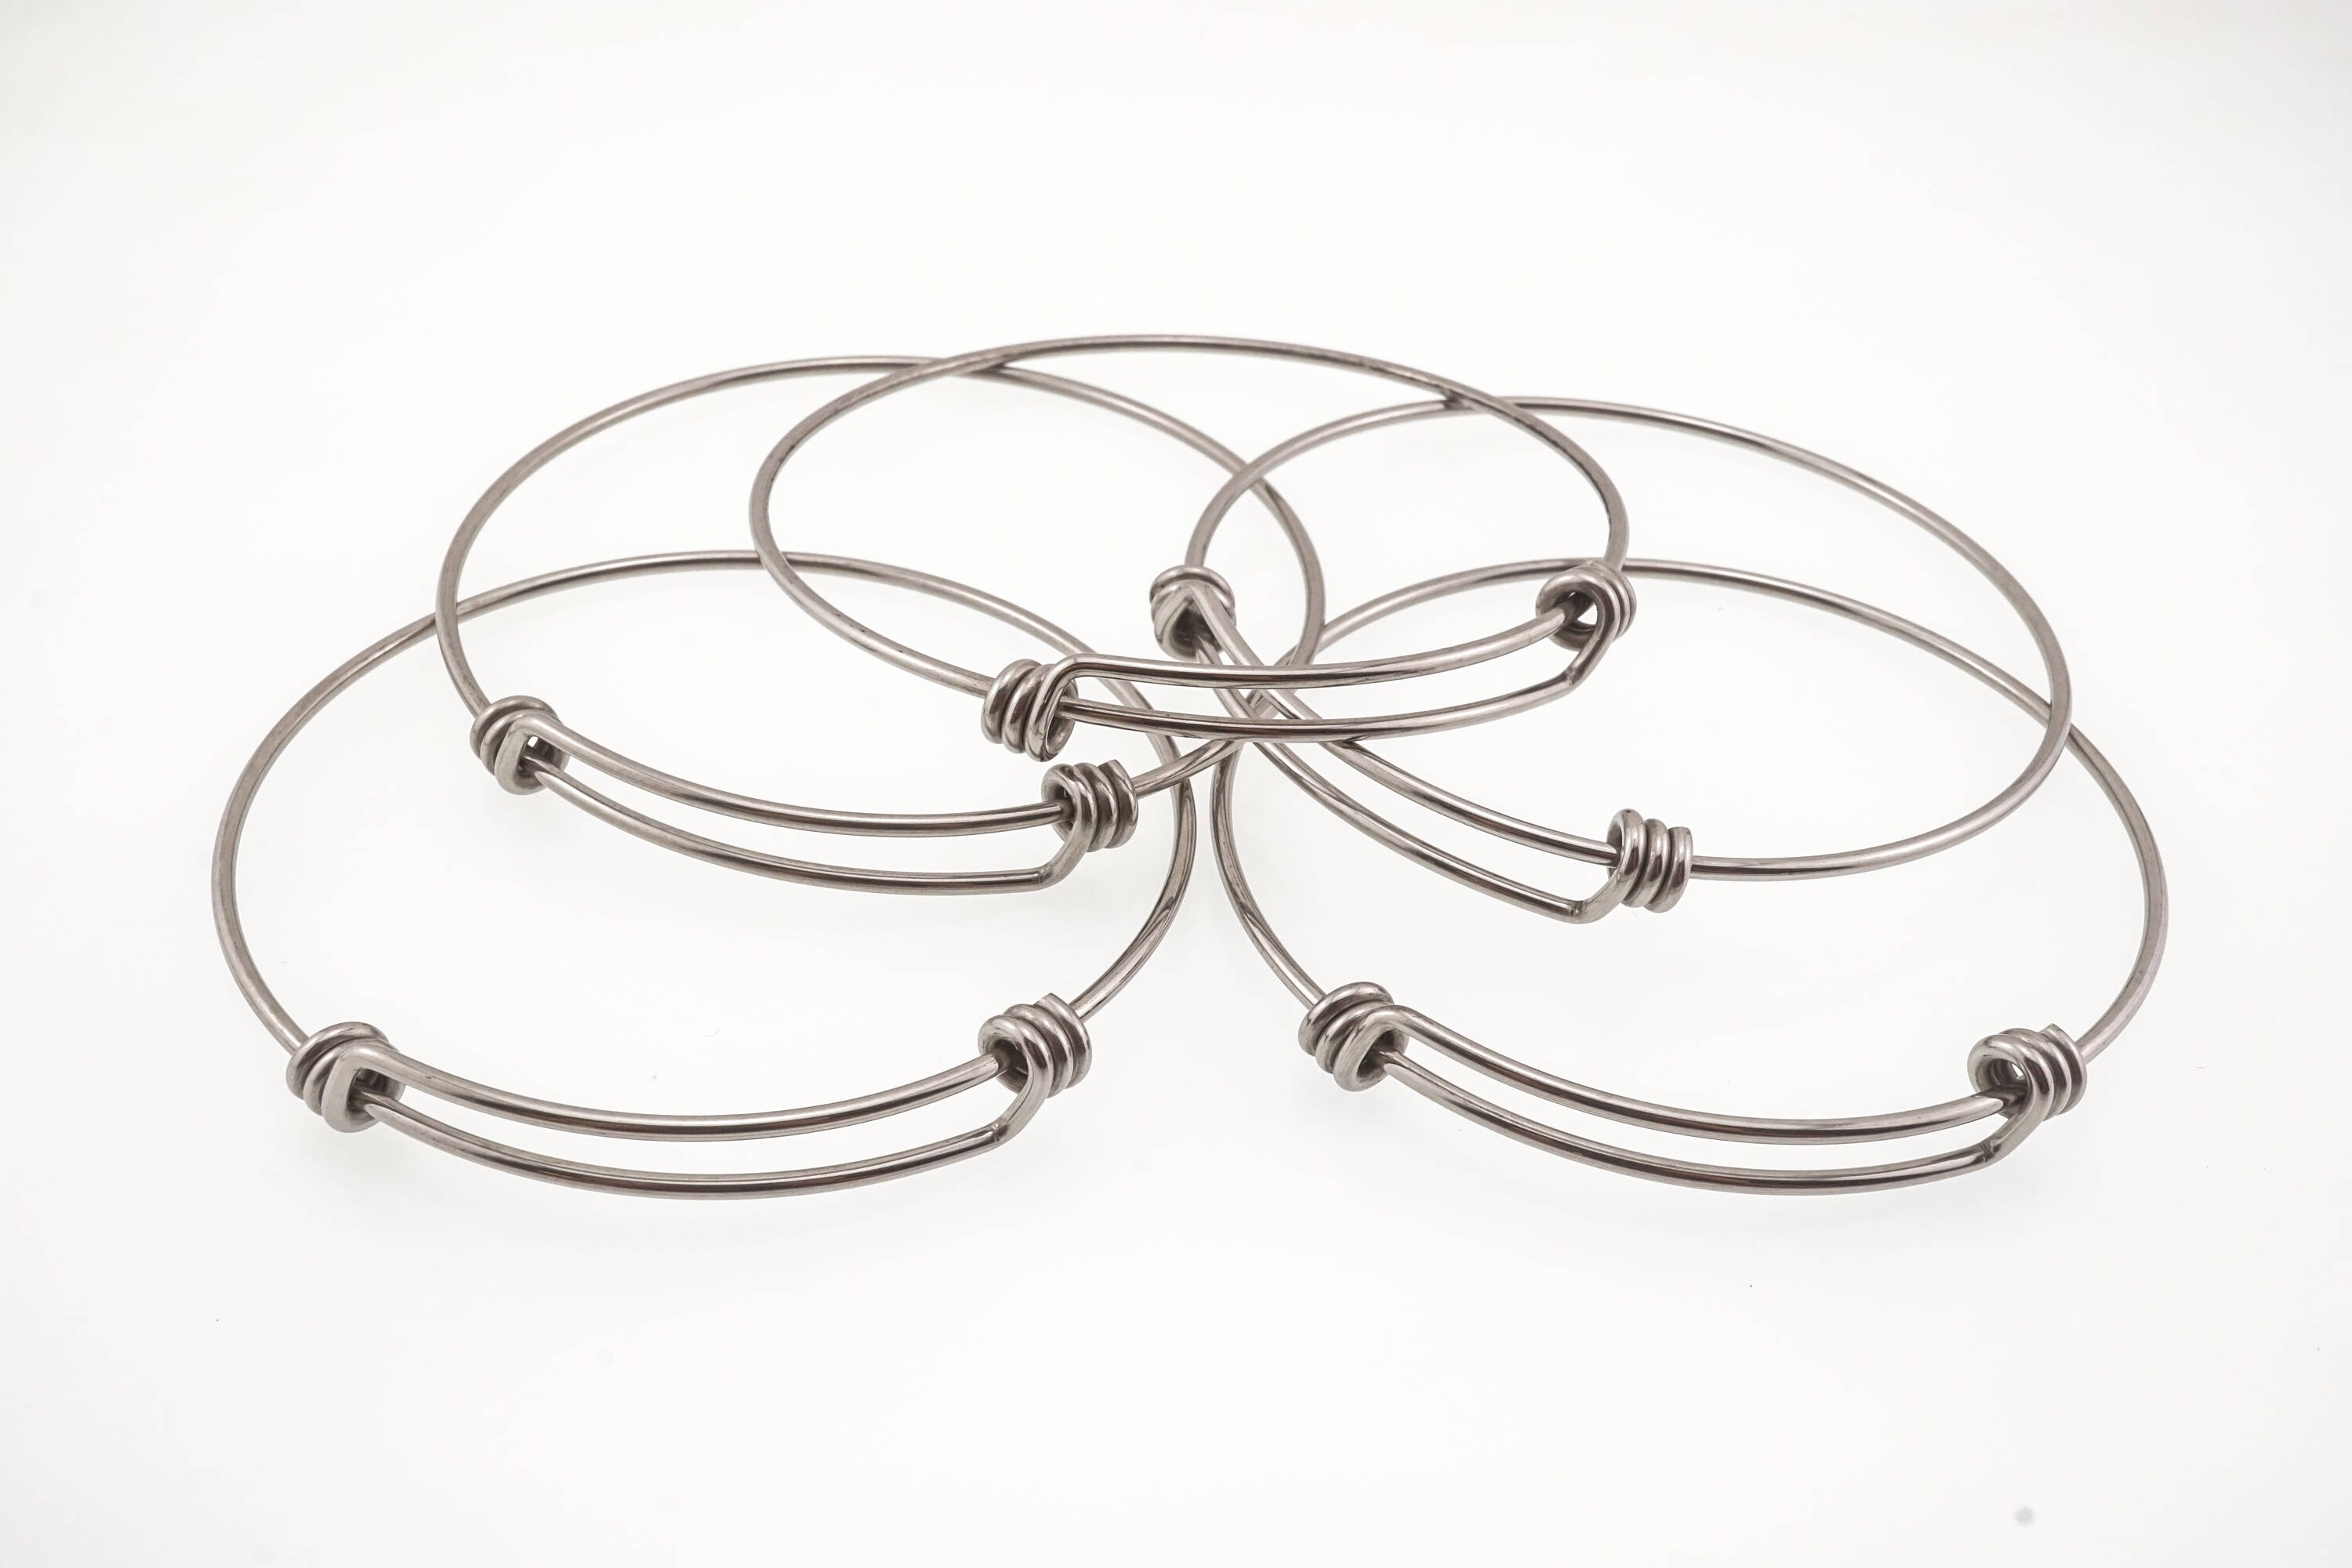 8 Gauge Half Round Wire, Sterling Silver Wire, 1 Ft Wire, Jewelry Wire  3.25mm X 1.63 Mm, Cuff Wire, Bangle Wire, Ring Wire, Romazone 